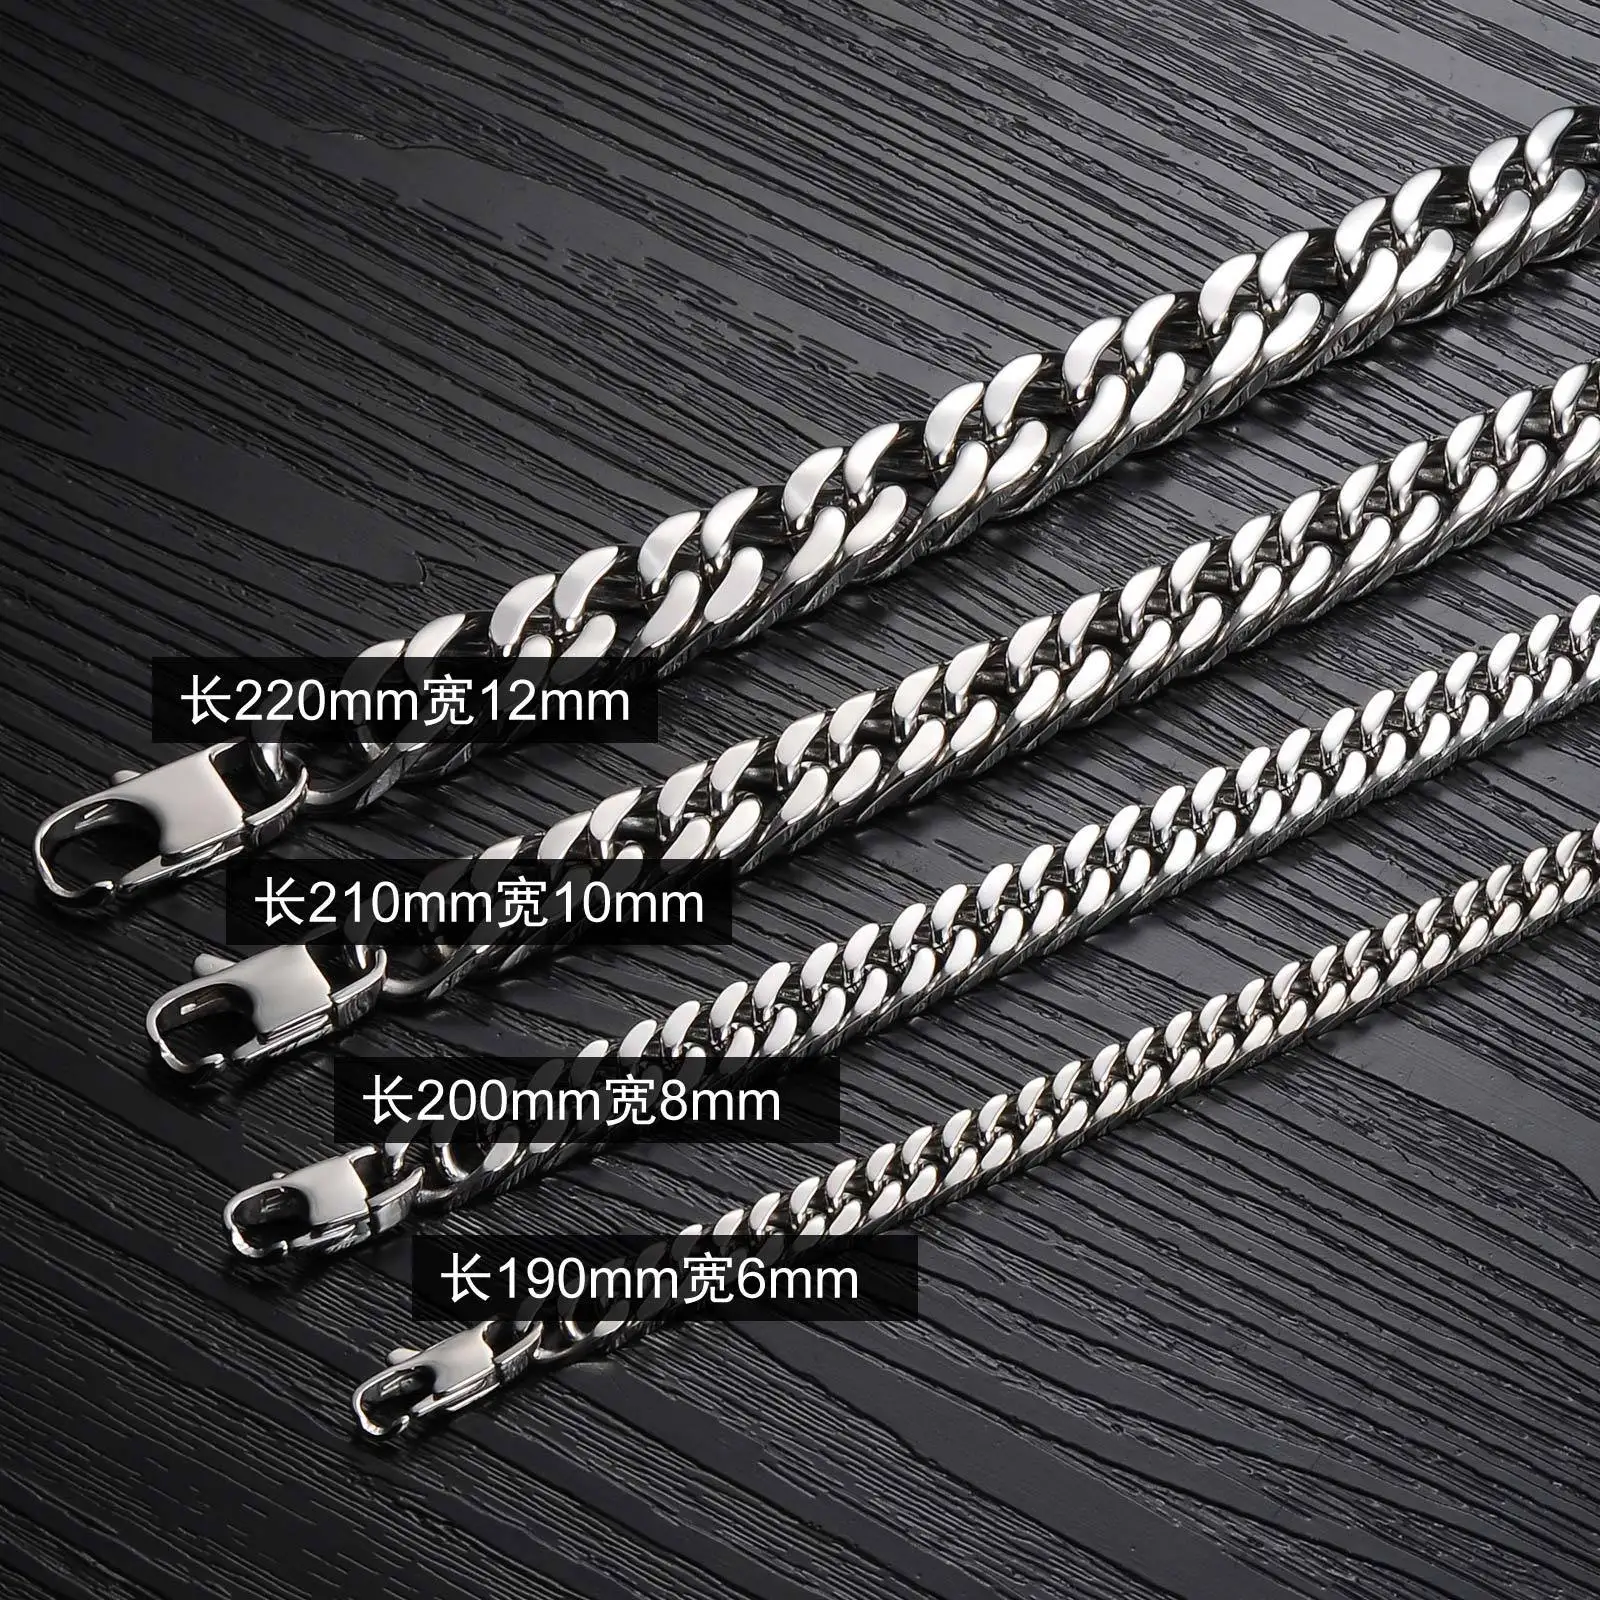 2019 Sexy titanium steel bracelet men,stainless steel bracelet man cuban link chain bracelet wholesale